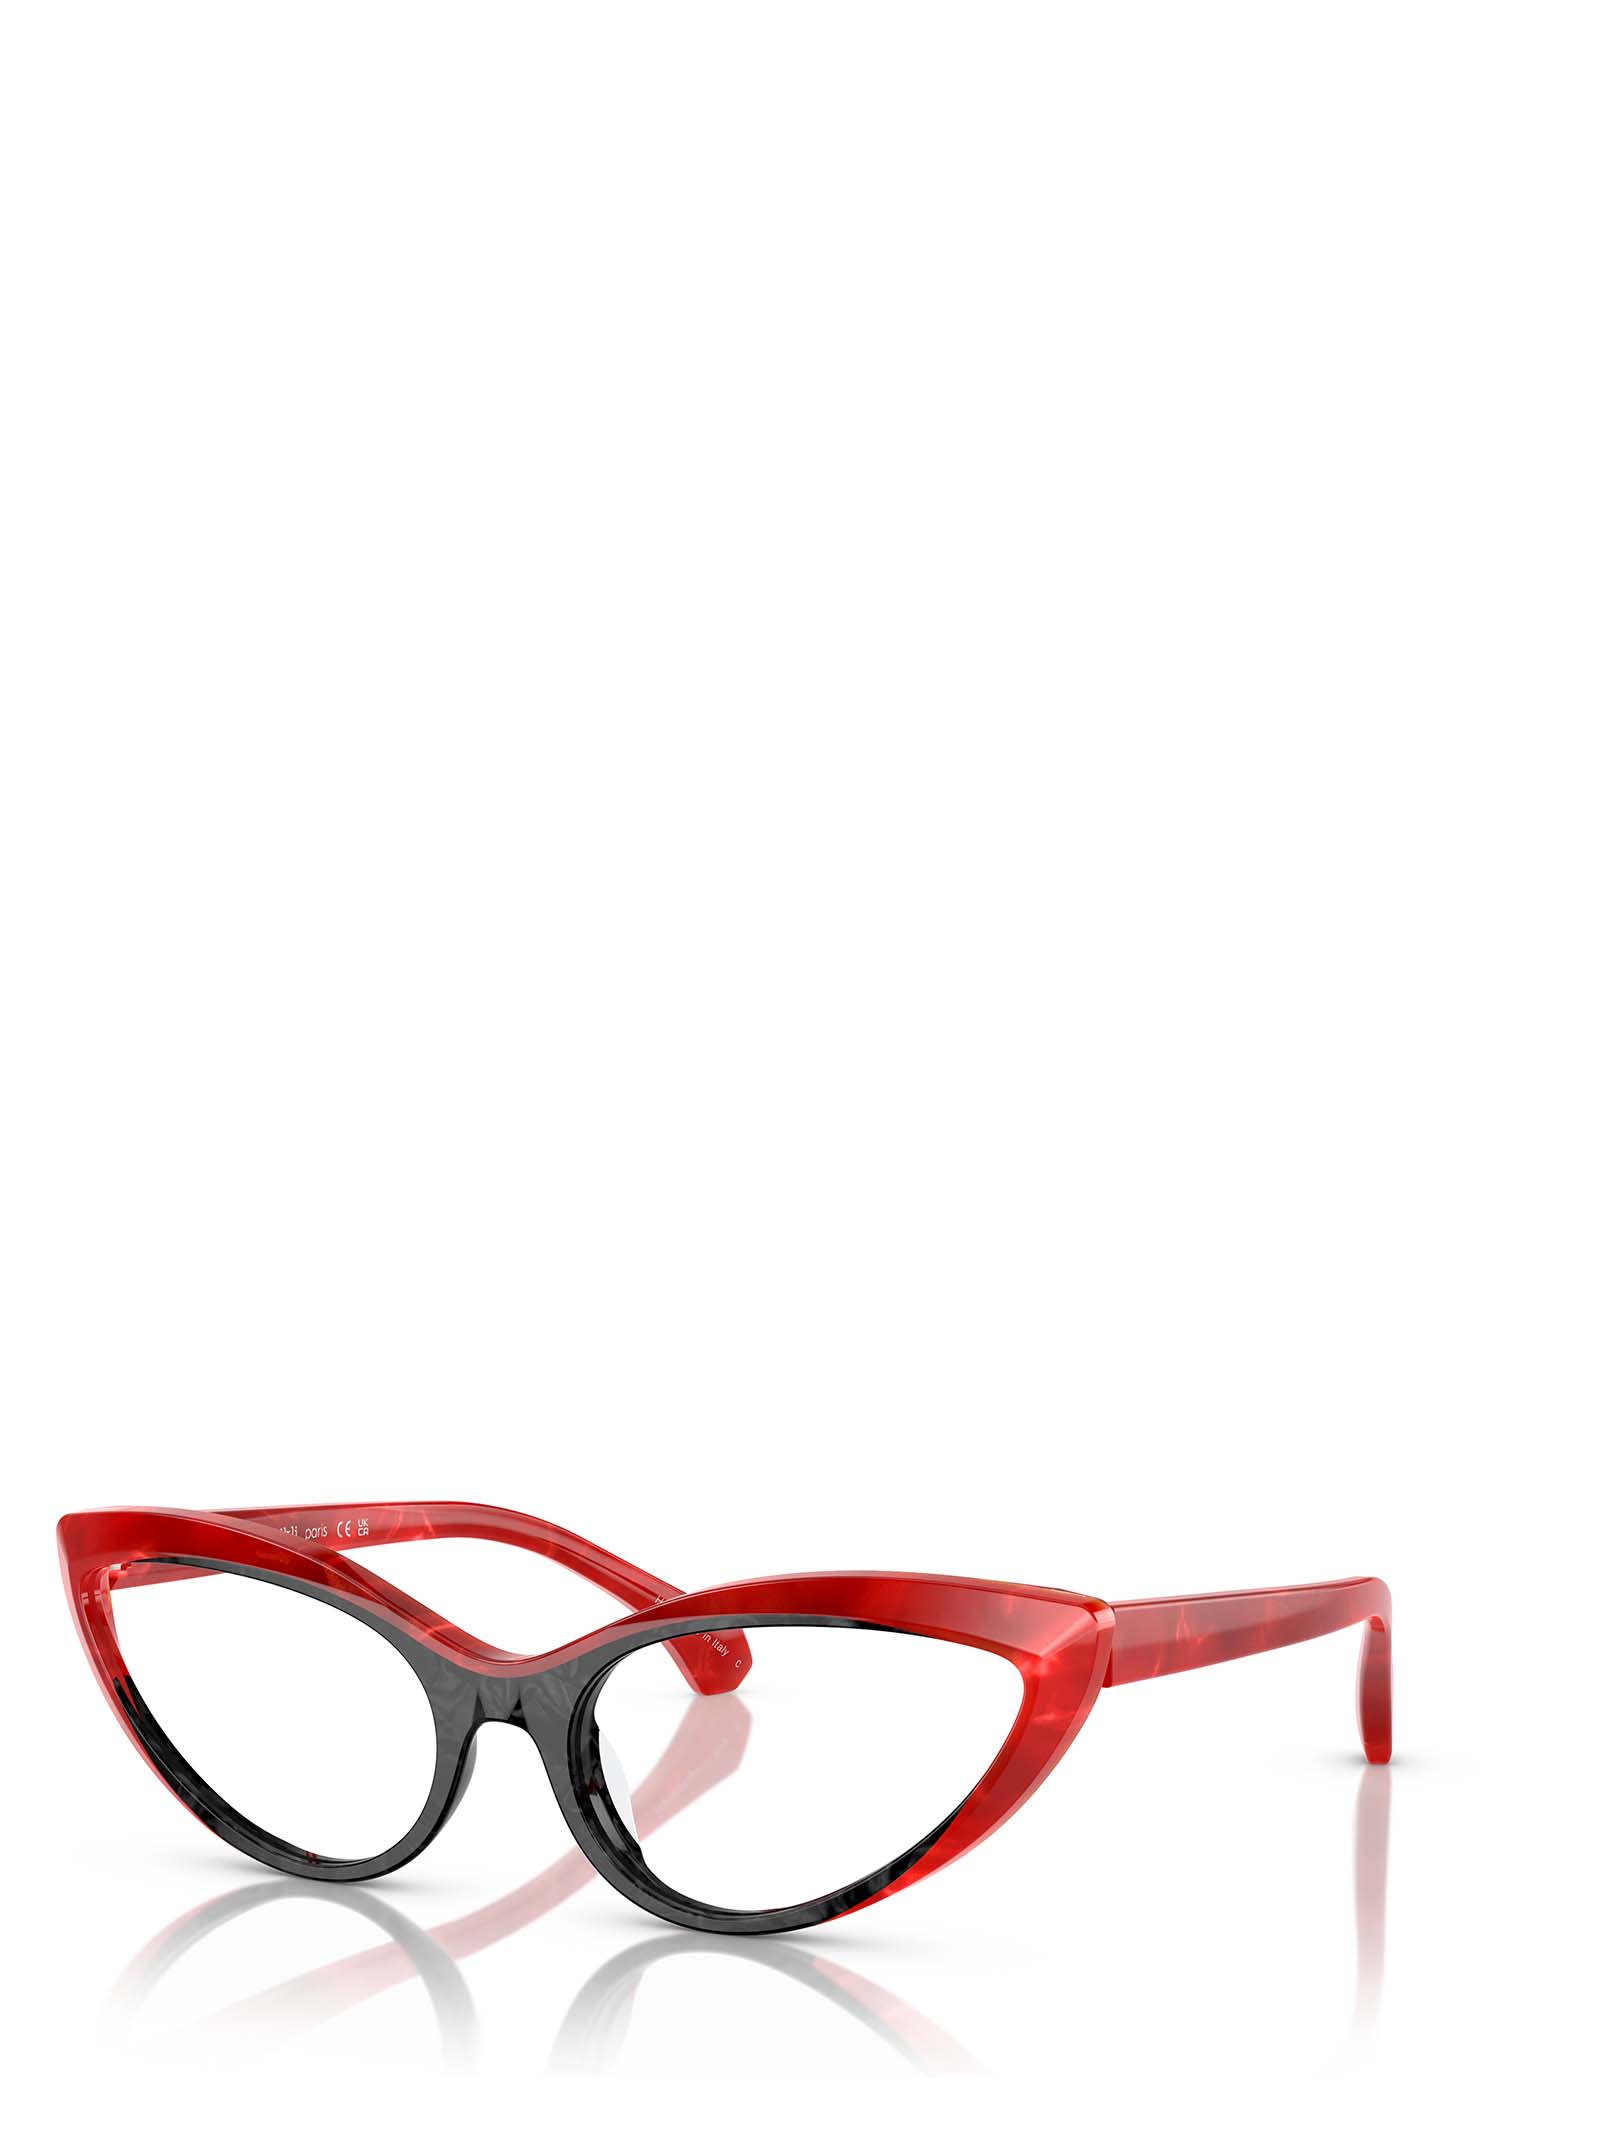 Shop Alain Mikli A03503 Noir Nacree/rouge Nacree Glasses